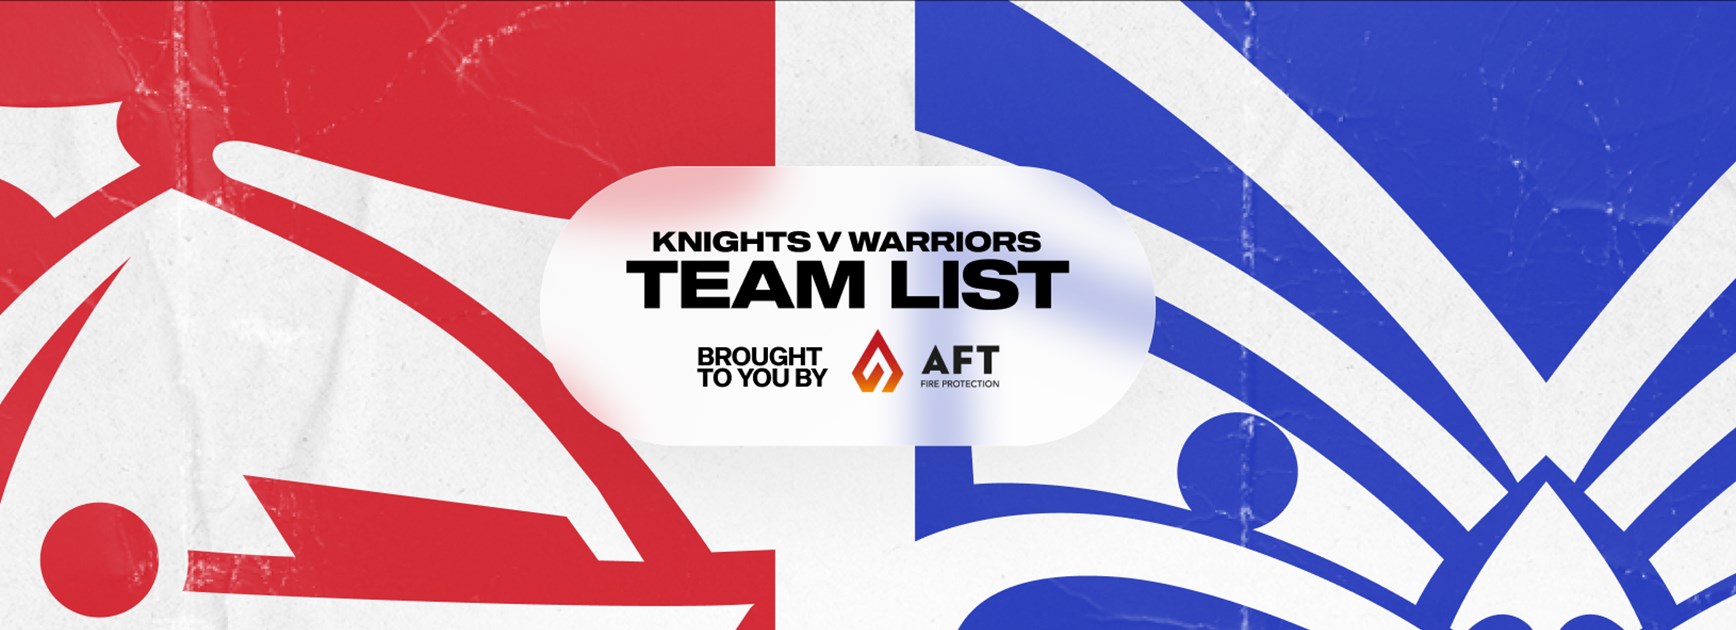 Knights v Warriors Round 9 NRL team list